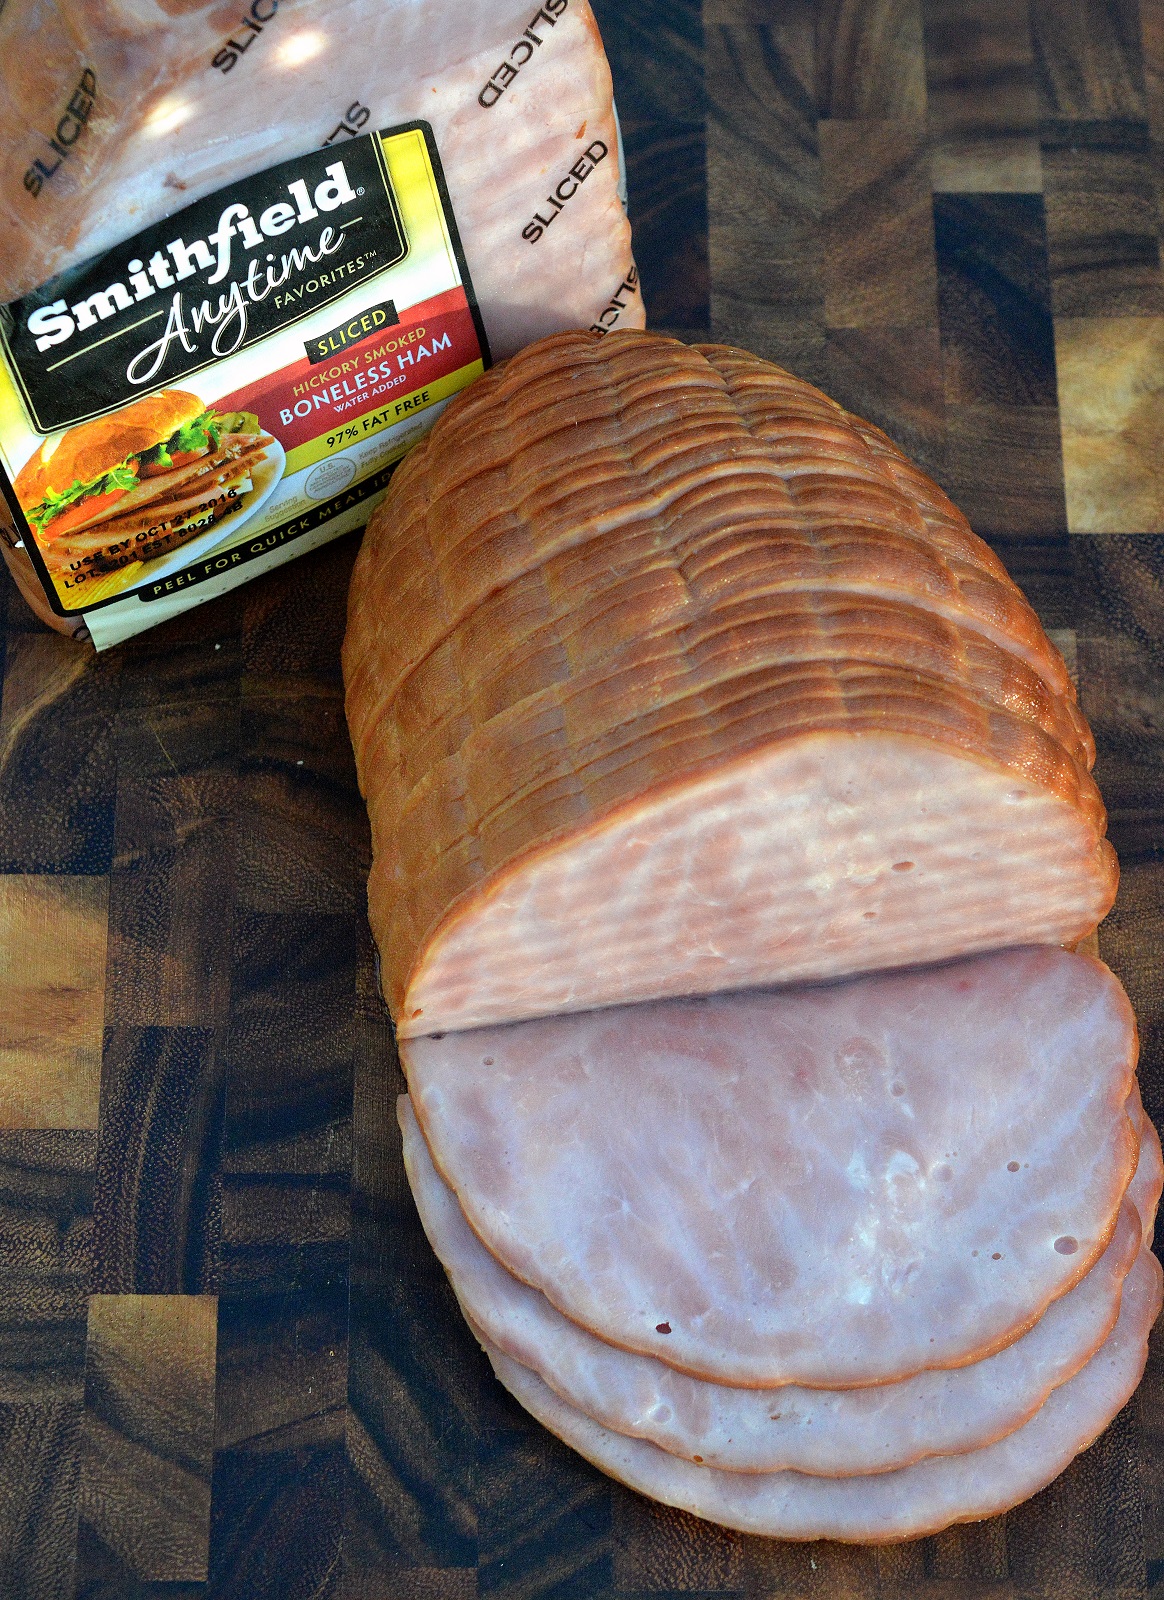 Smithfield Anytime Favorites Smoked Sliced Boneless Ham